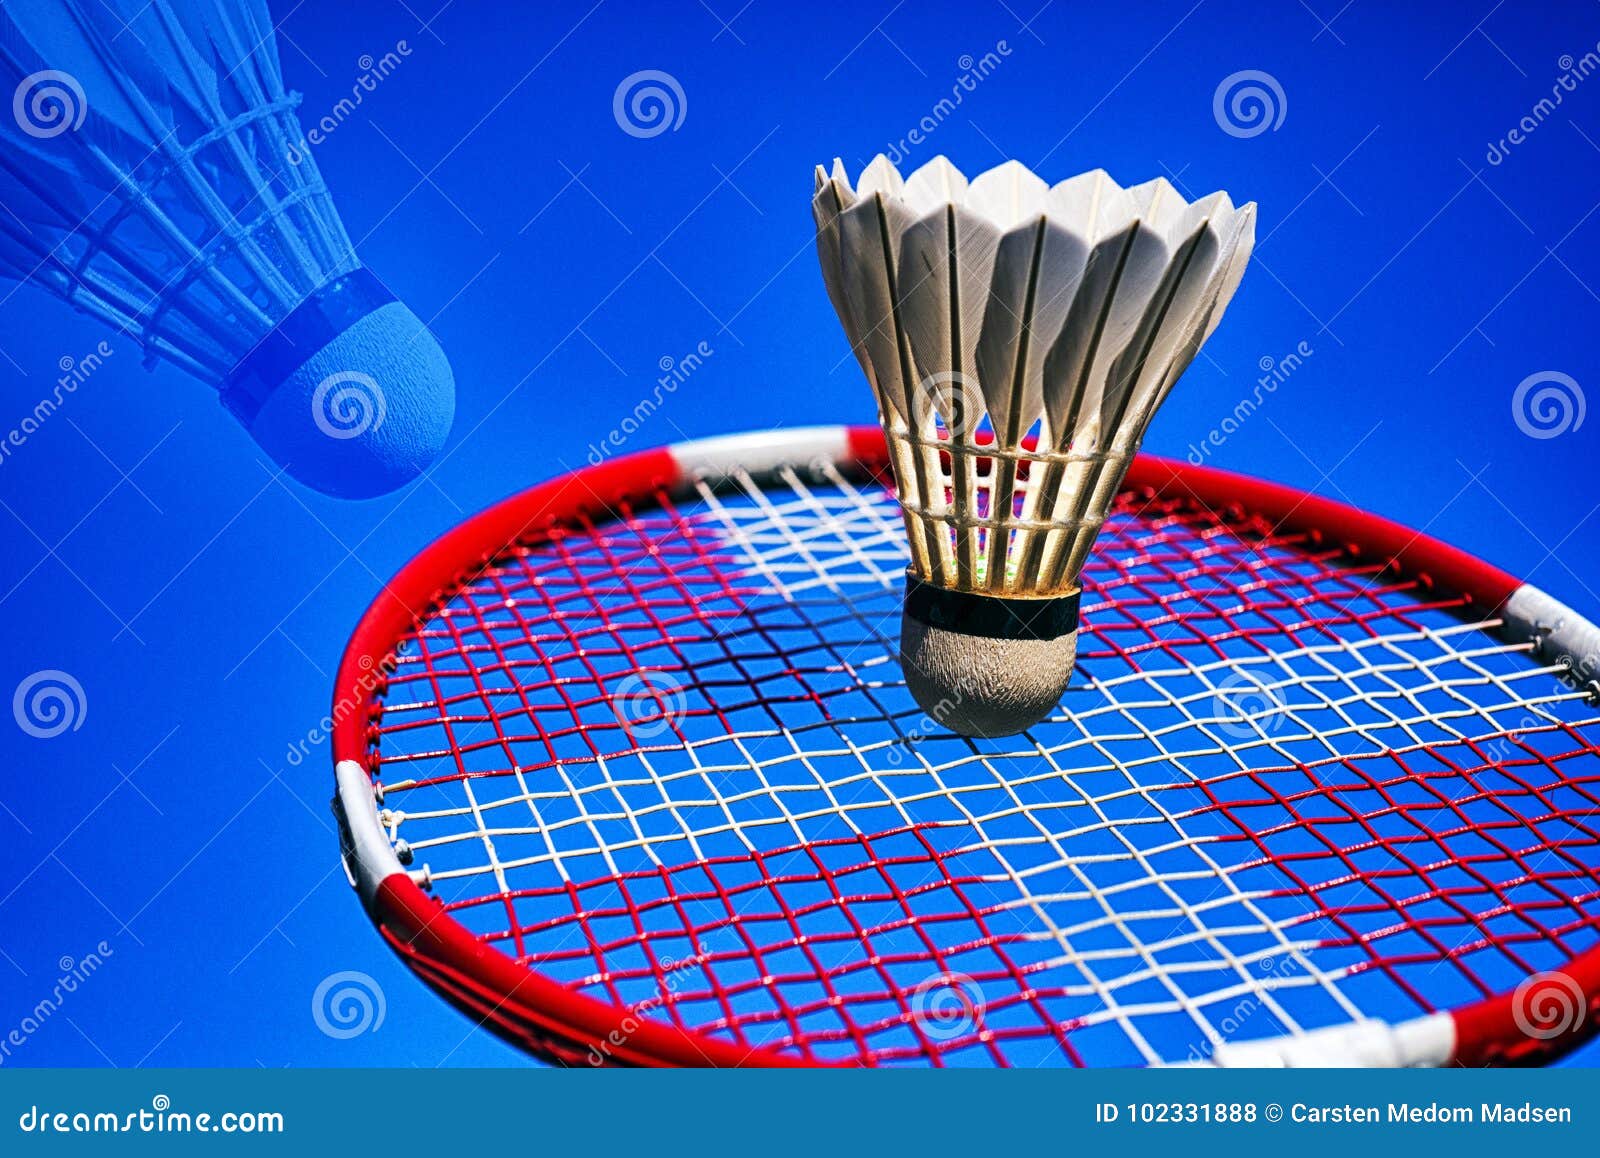 Top 999+ Badminton Wallpaper Full HD, 4K✓Free to Use